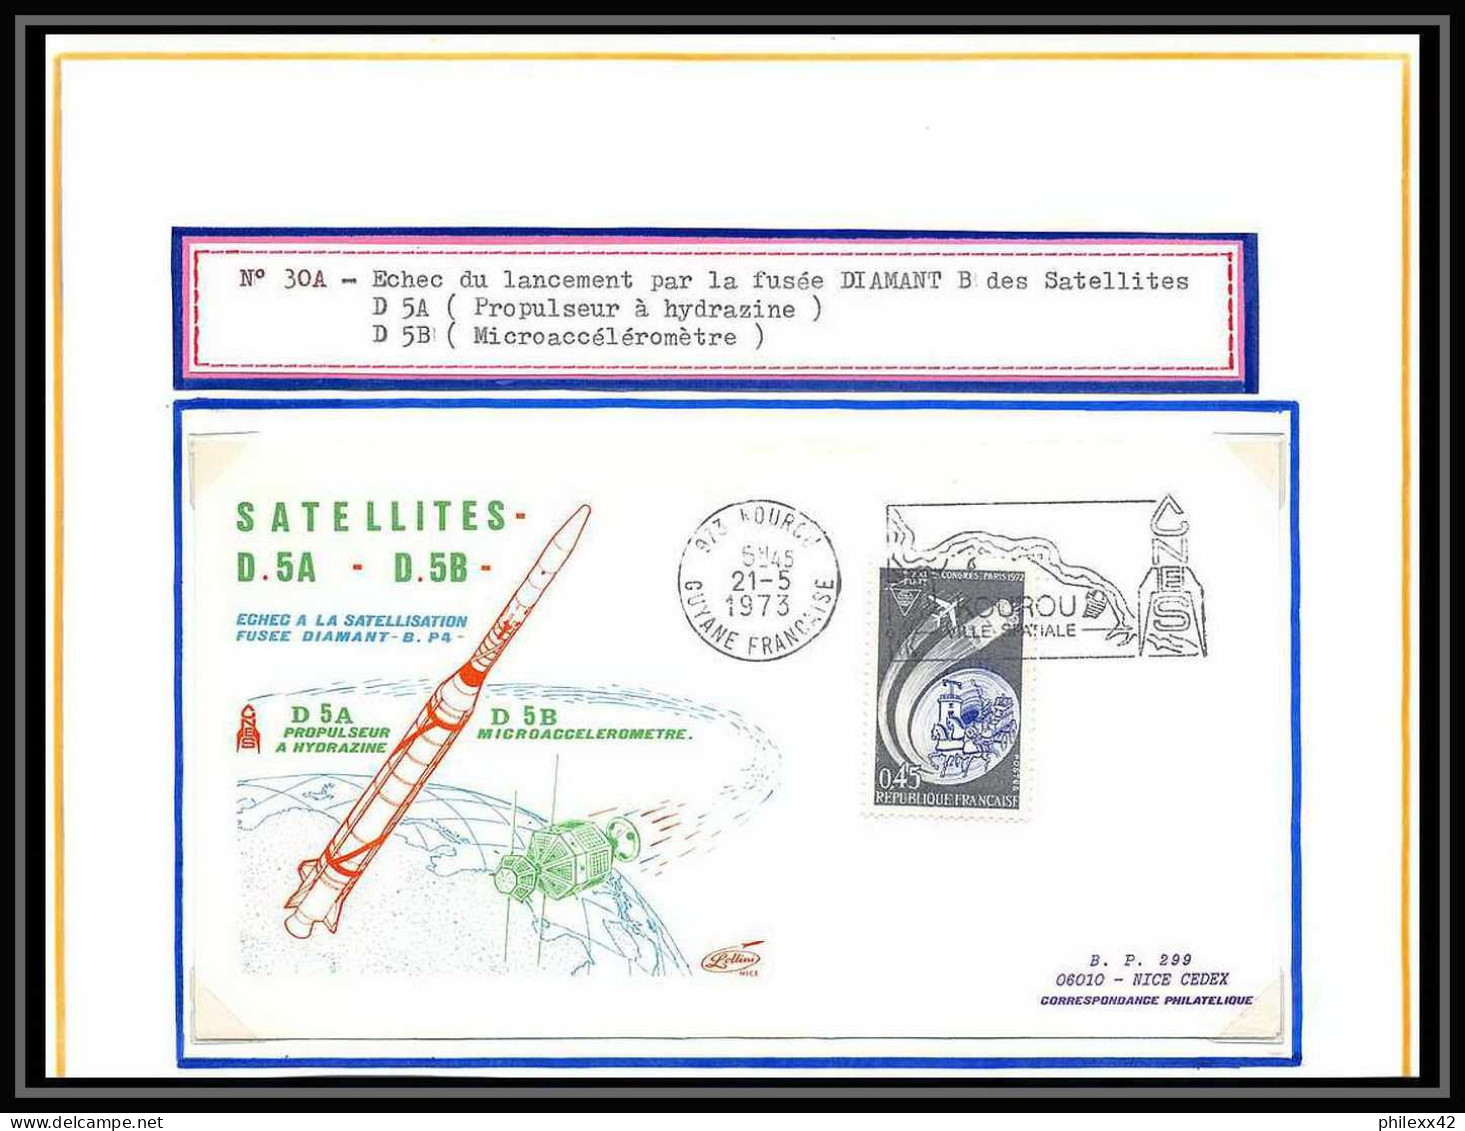 12013 Lollini 30a Echec Diamant B 1973 France Espace (space Raumfahrt) Lettre (cover Briefe) - Europa